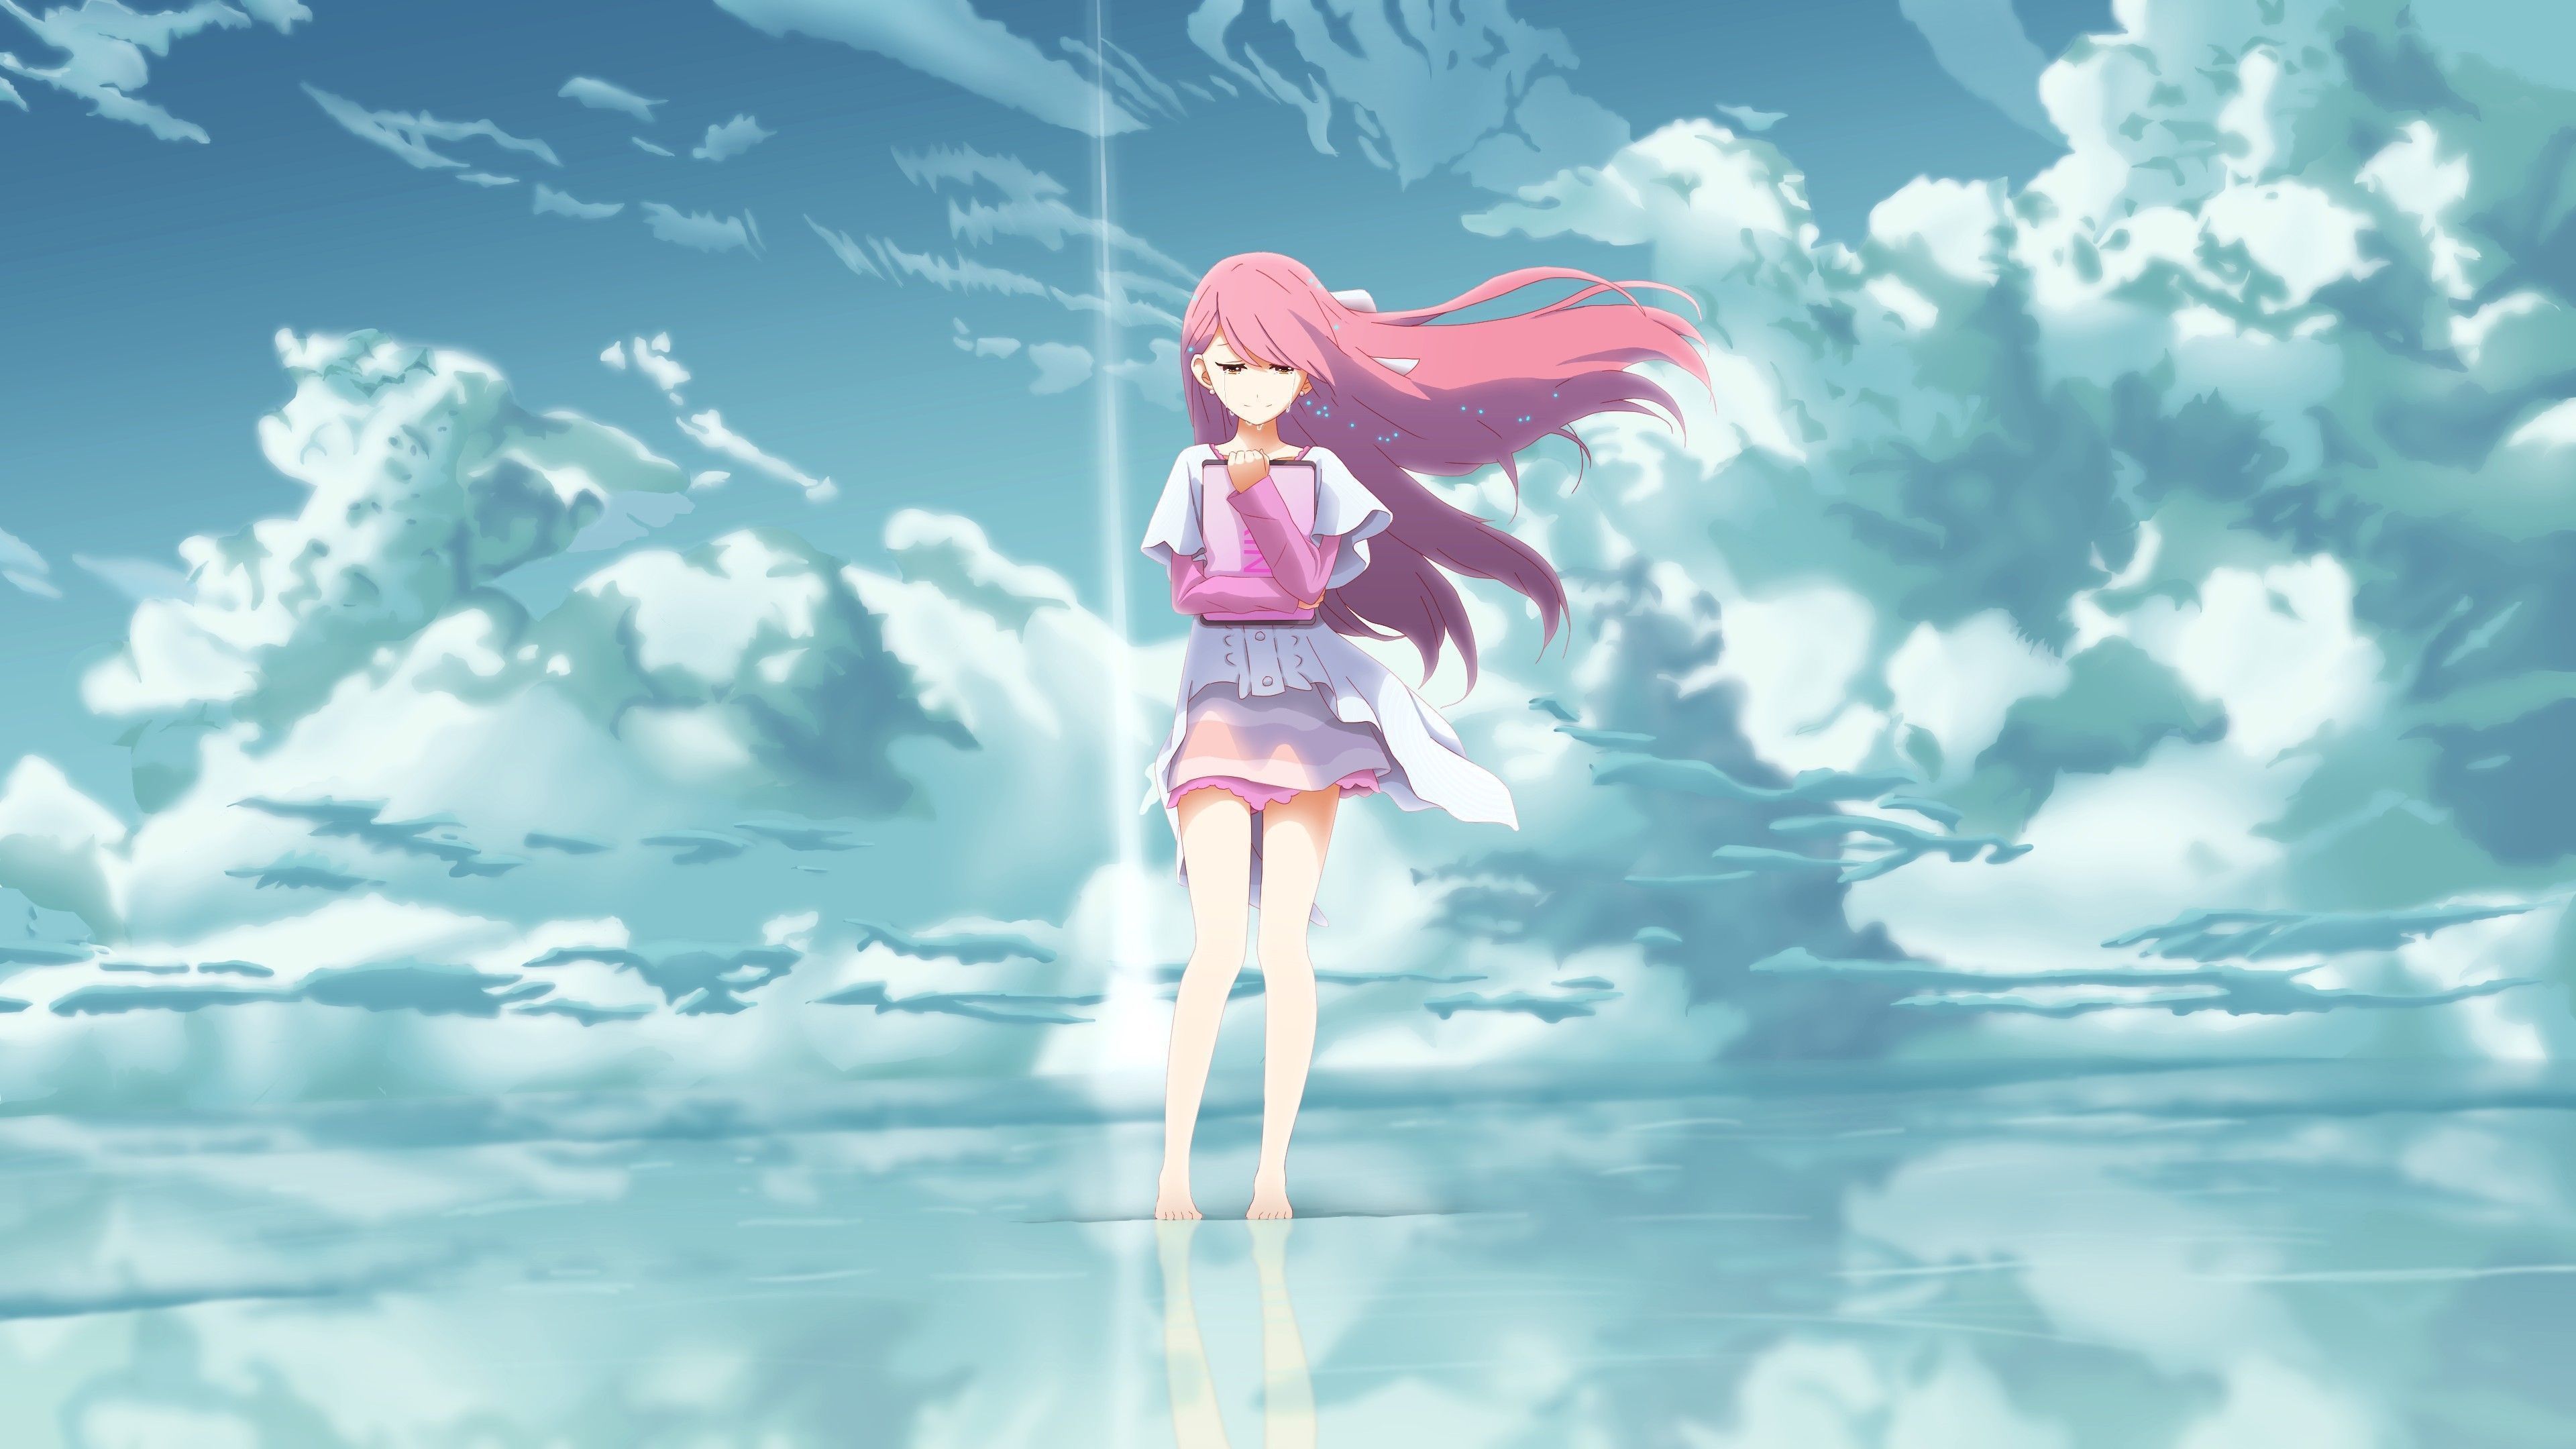 Anime #Wallpaper #Background. Anime Wallpaper HD 1080p. Animated wallpaper for mobile, Anime background, Anime wallpaper phone